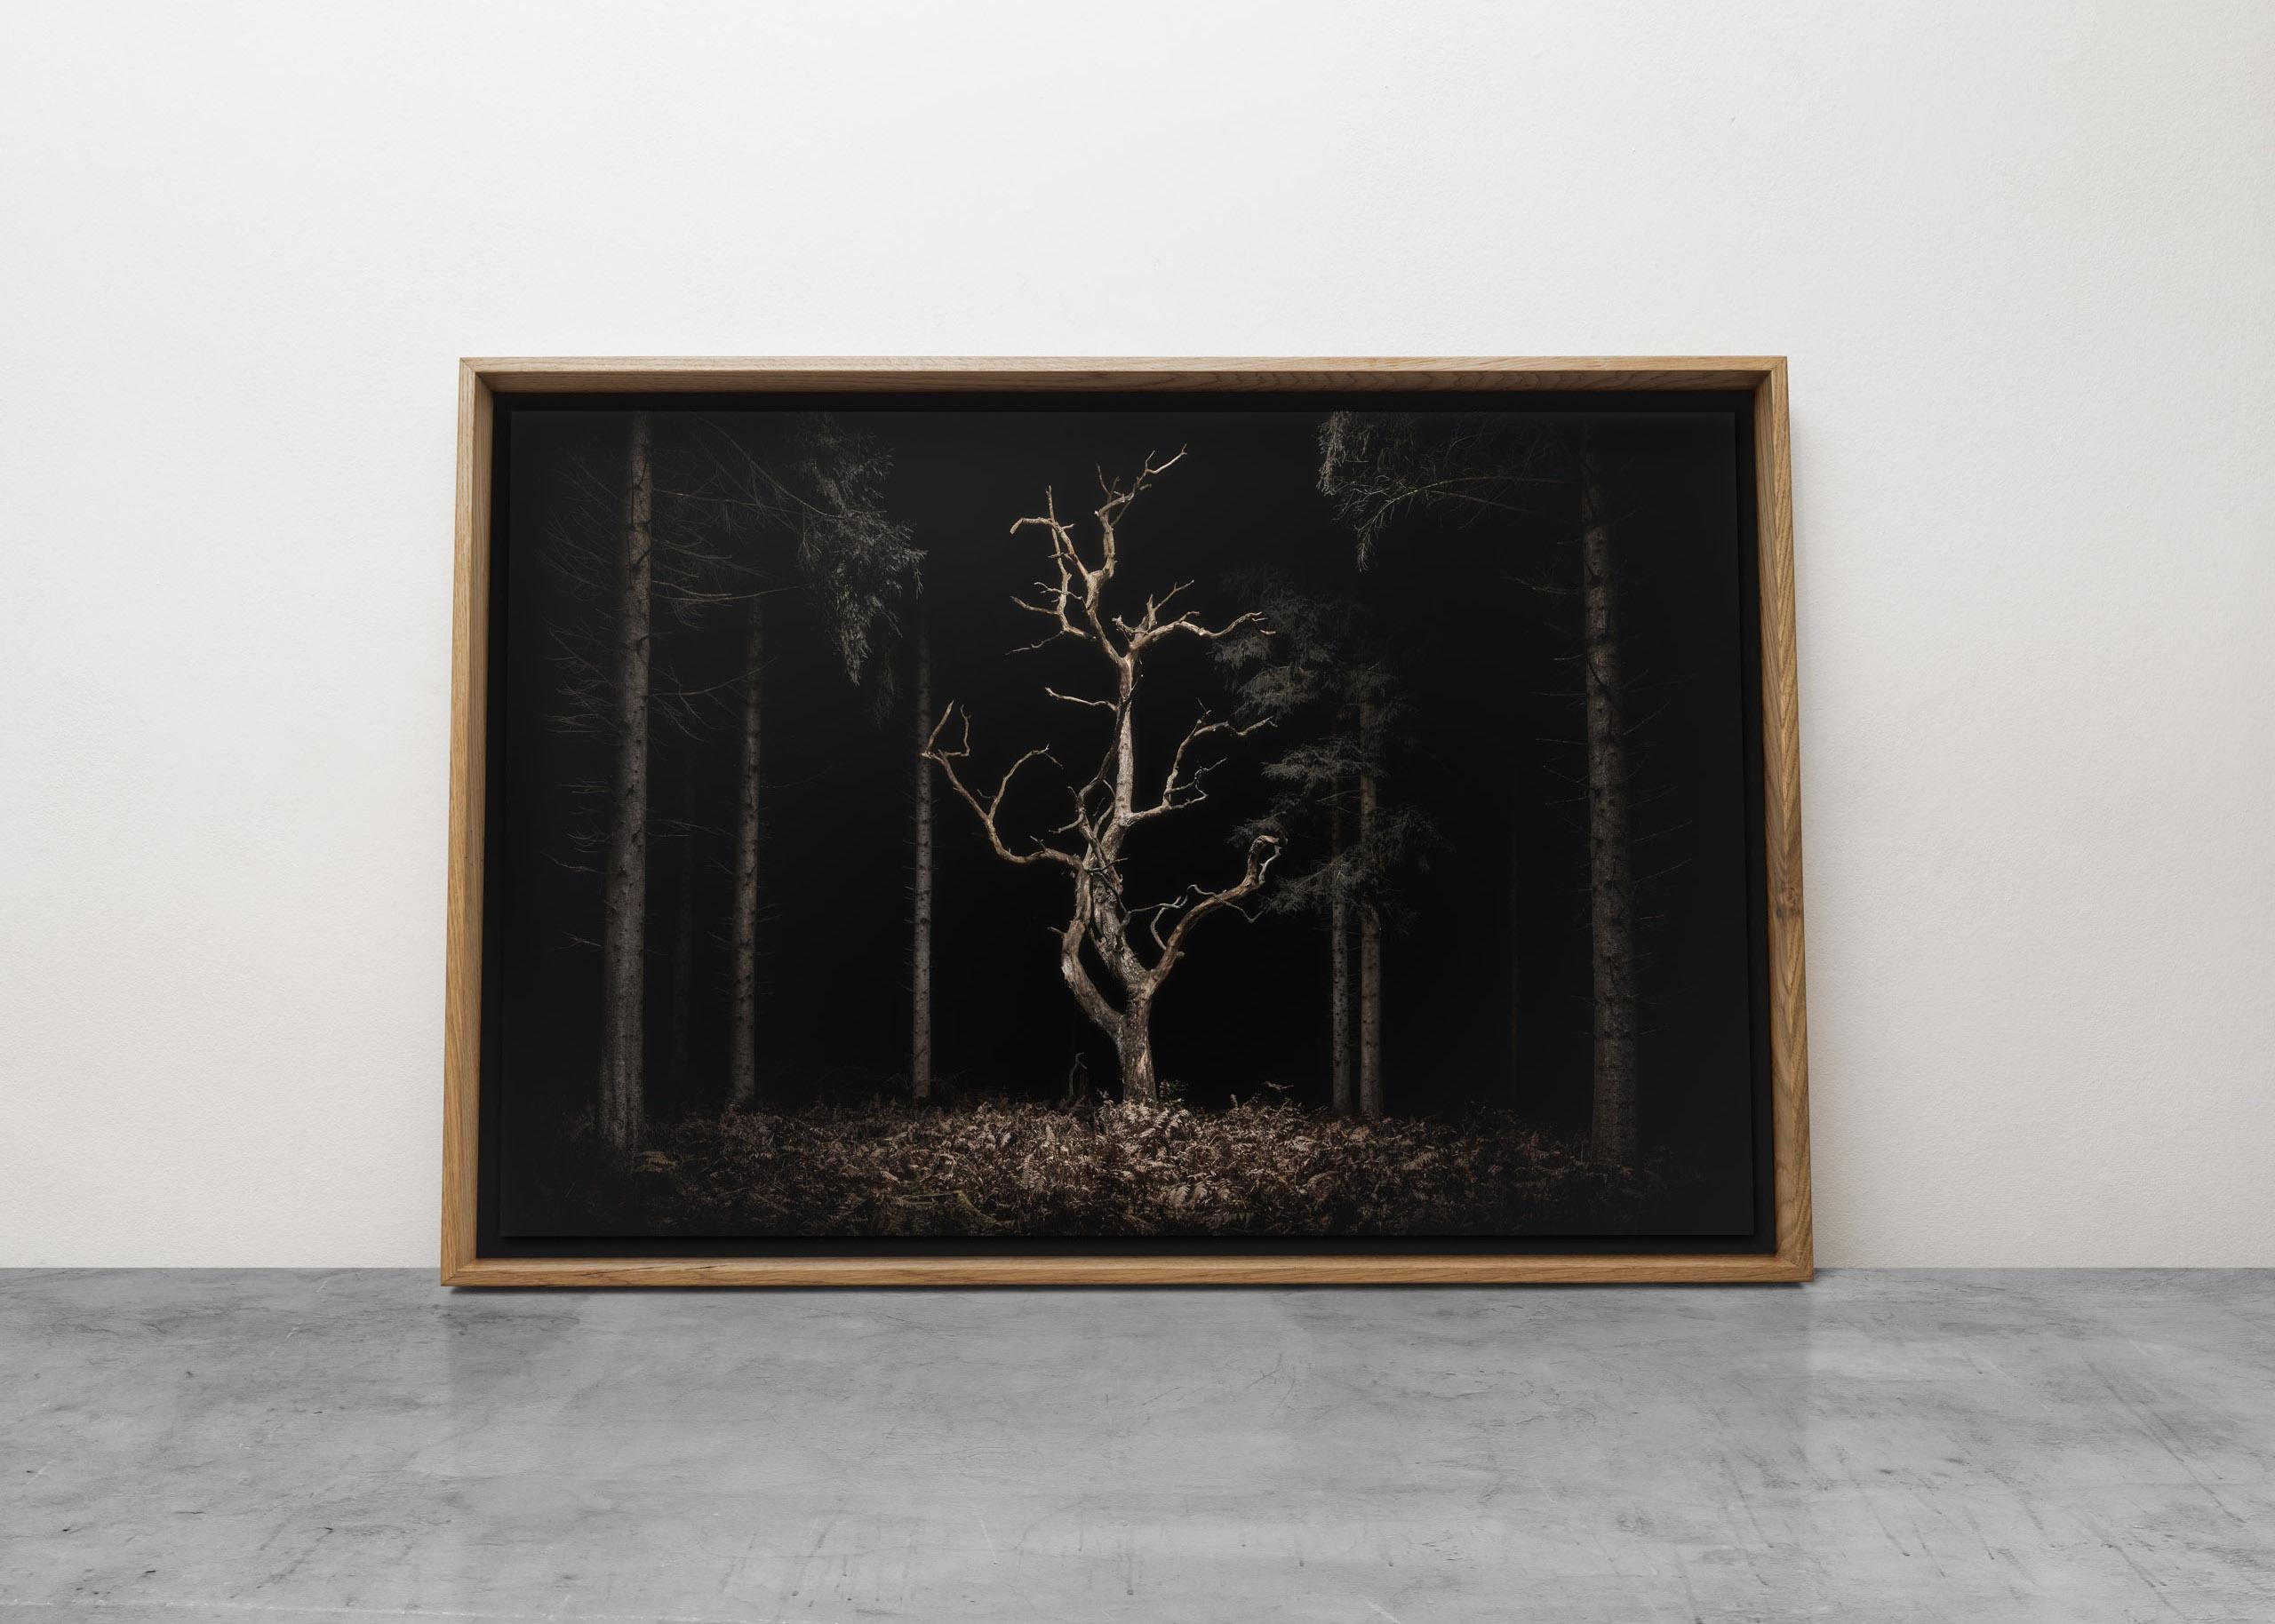 Twilight's 034, Danse Macabre - A skeletal Oak tree - Landscpae - Conceptual Photograph by Jasper Goodall